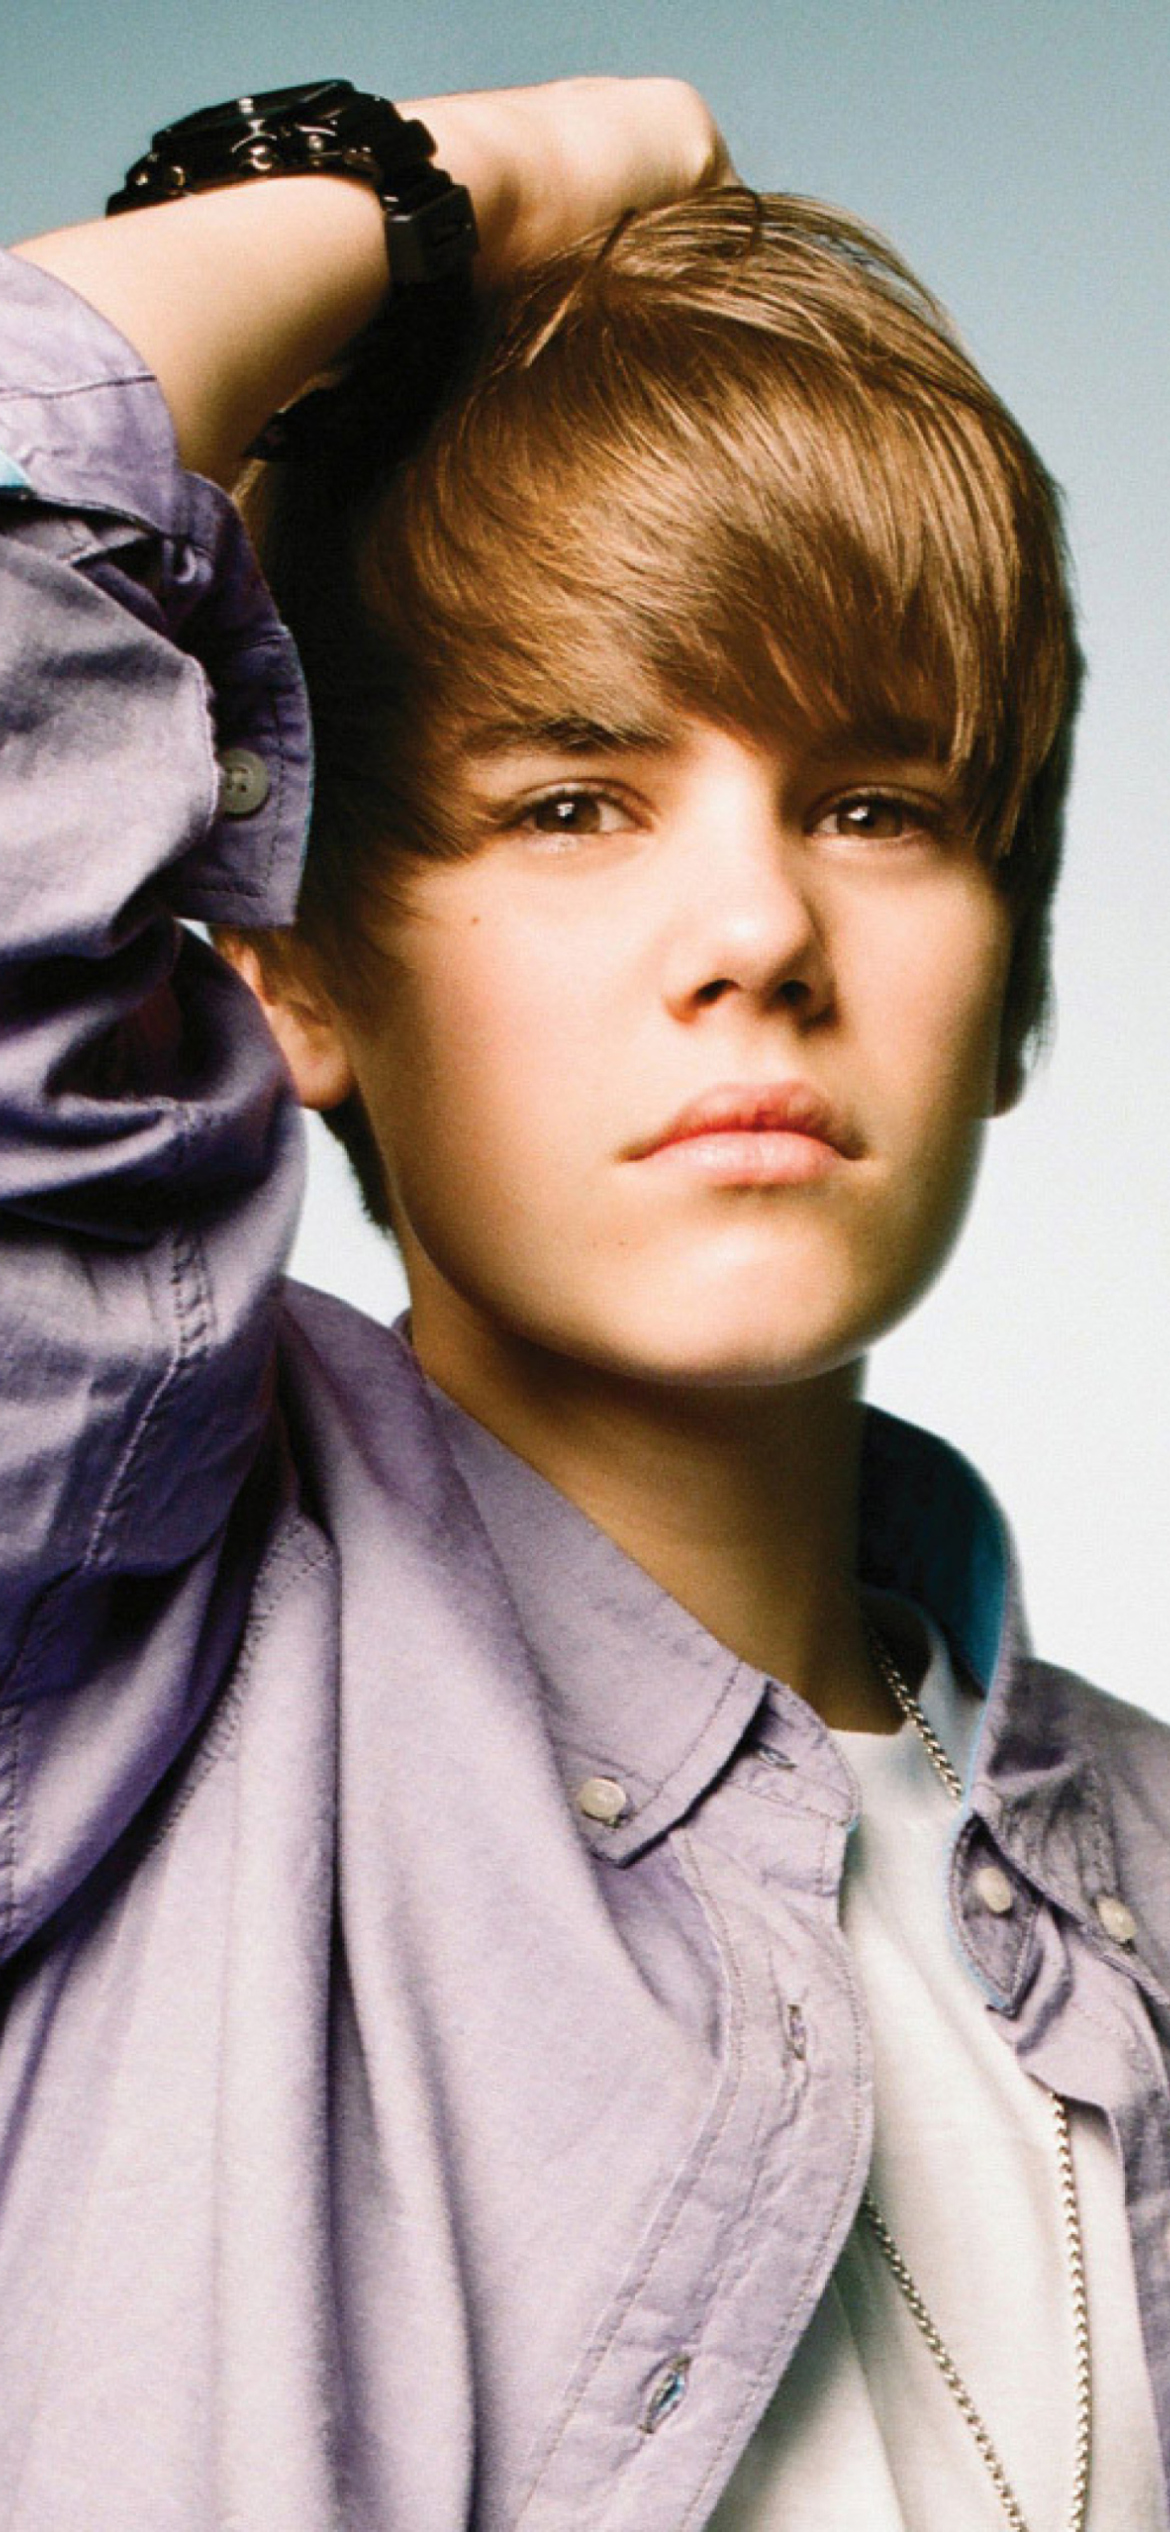 Justin Bieber 2K wallpaper download